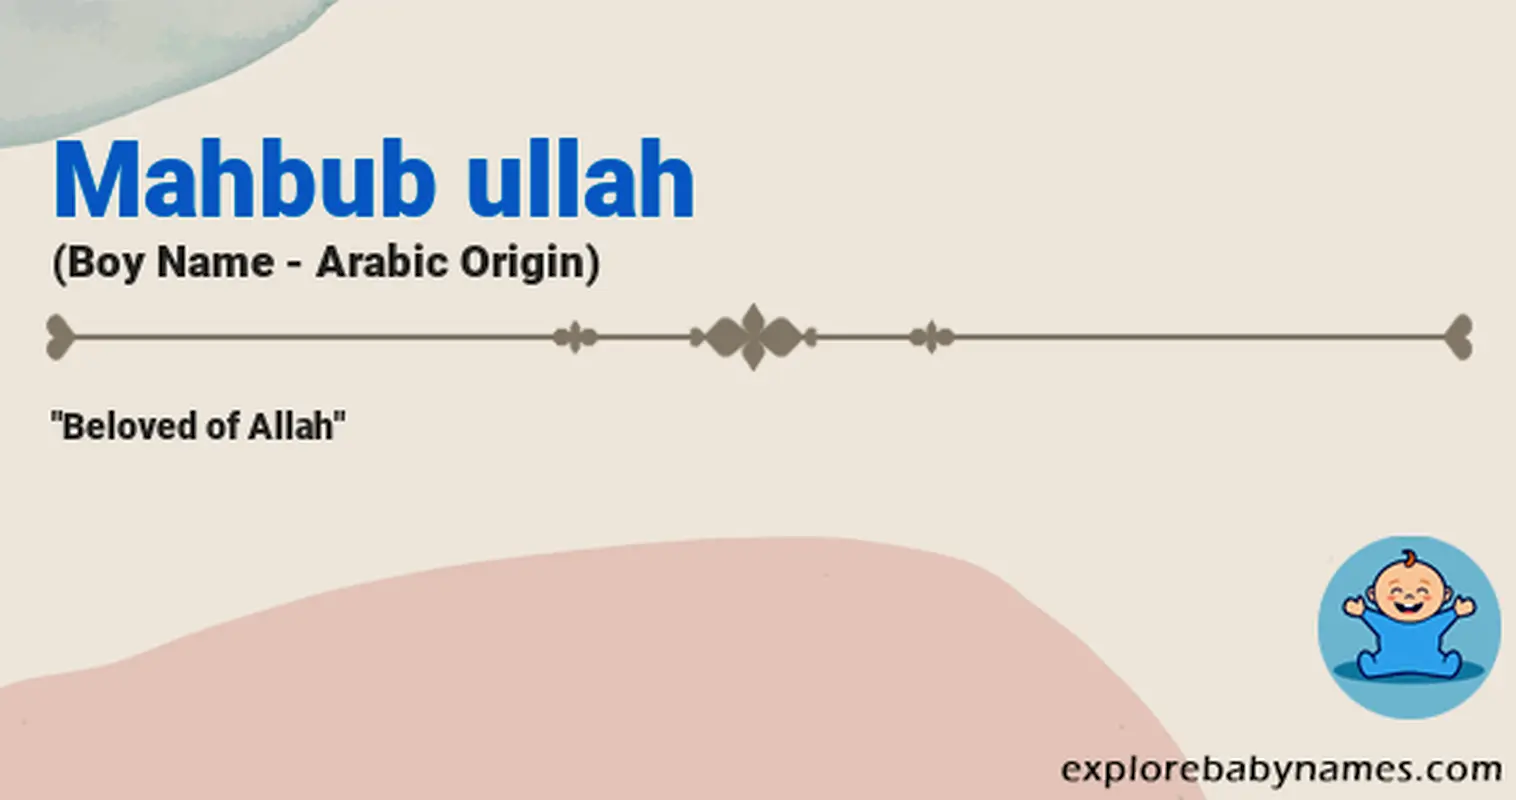 Meaning of Mahbub ullah